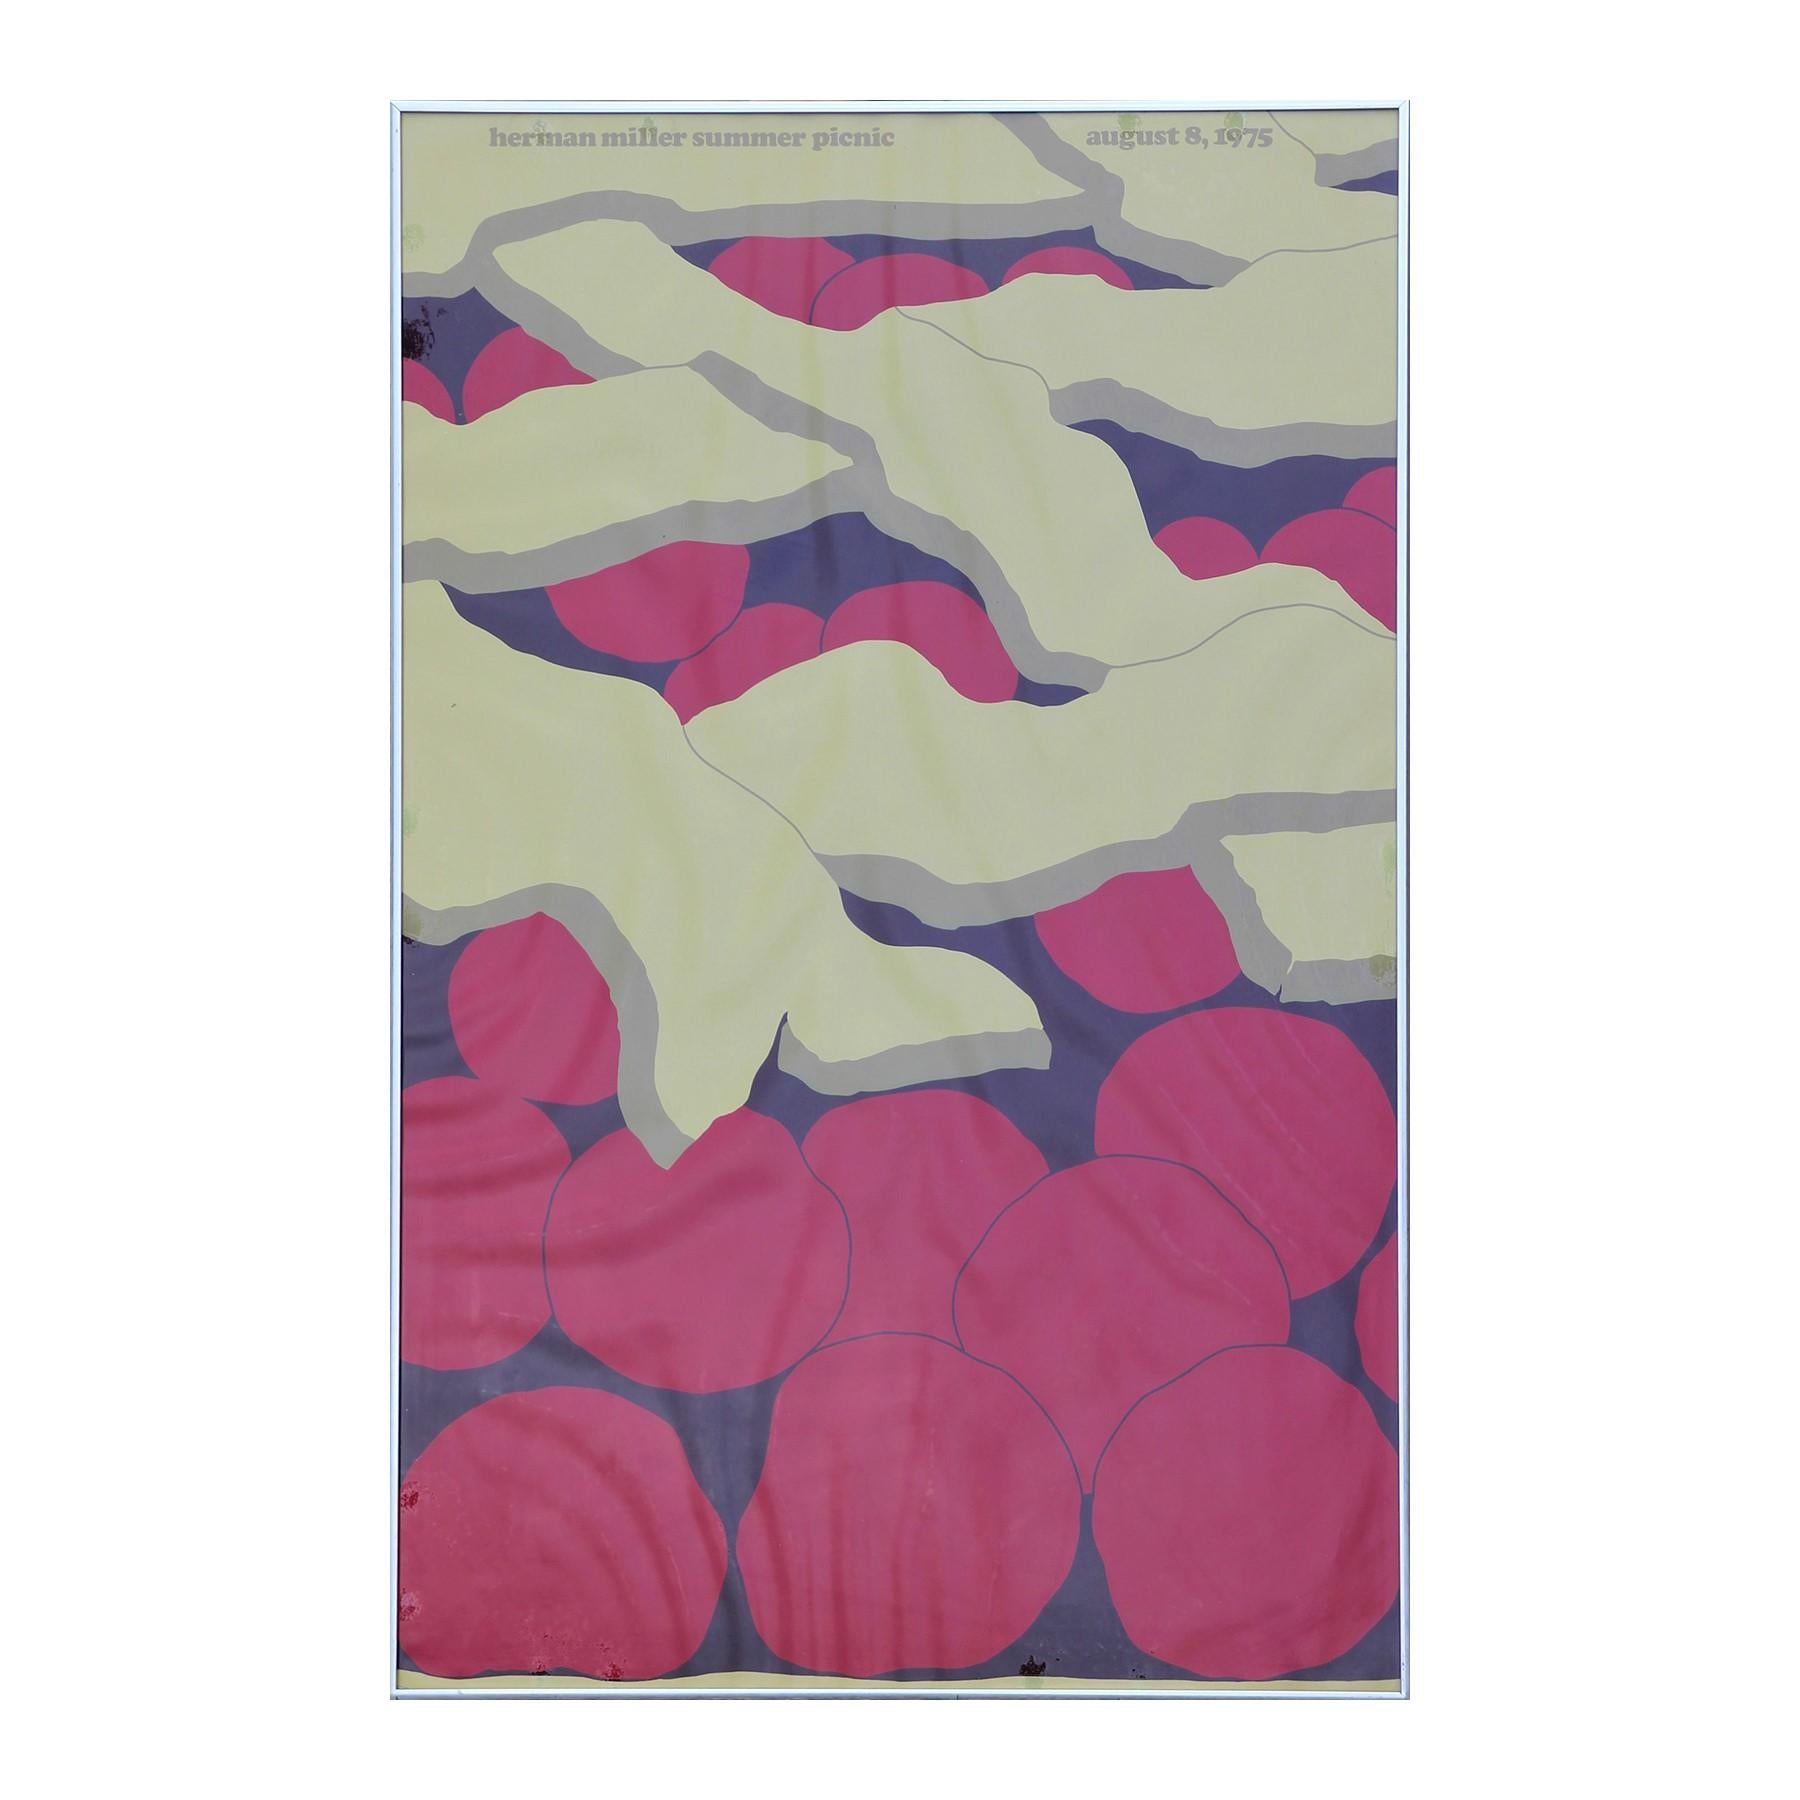 Stephen Frykholm Abstract Print - Herman Miller Summer Picnic August 8, 1975 - Cherry Pie Screen Print 